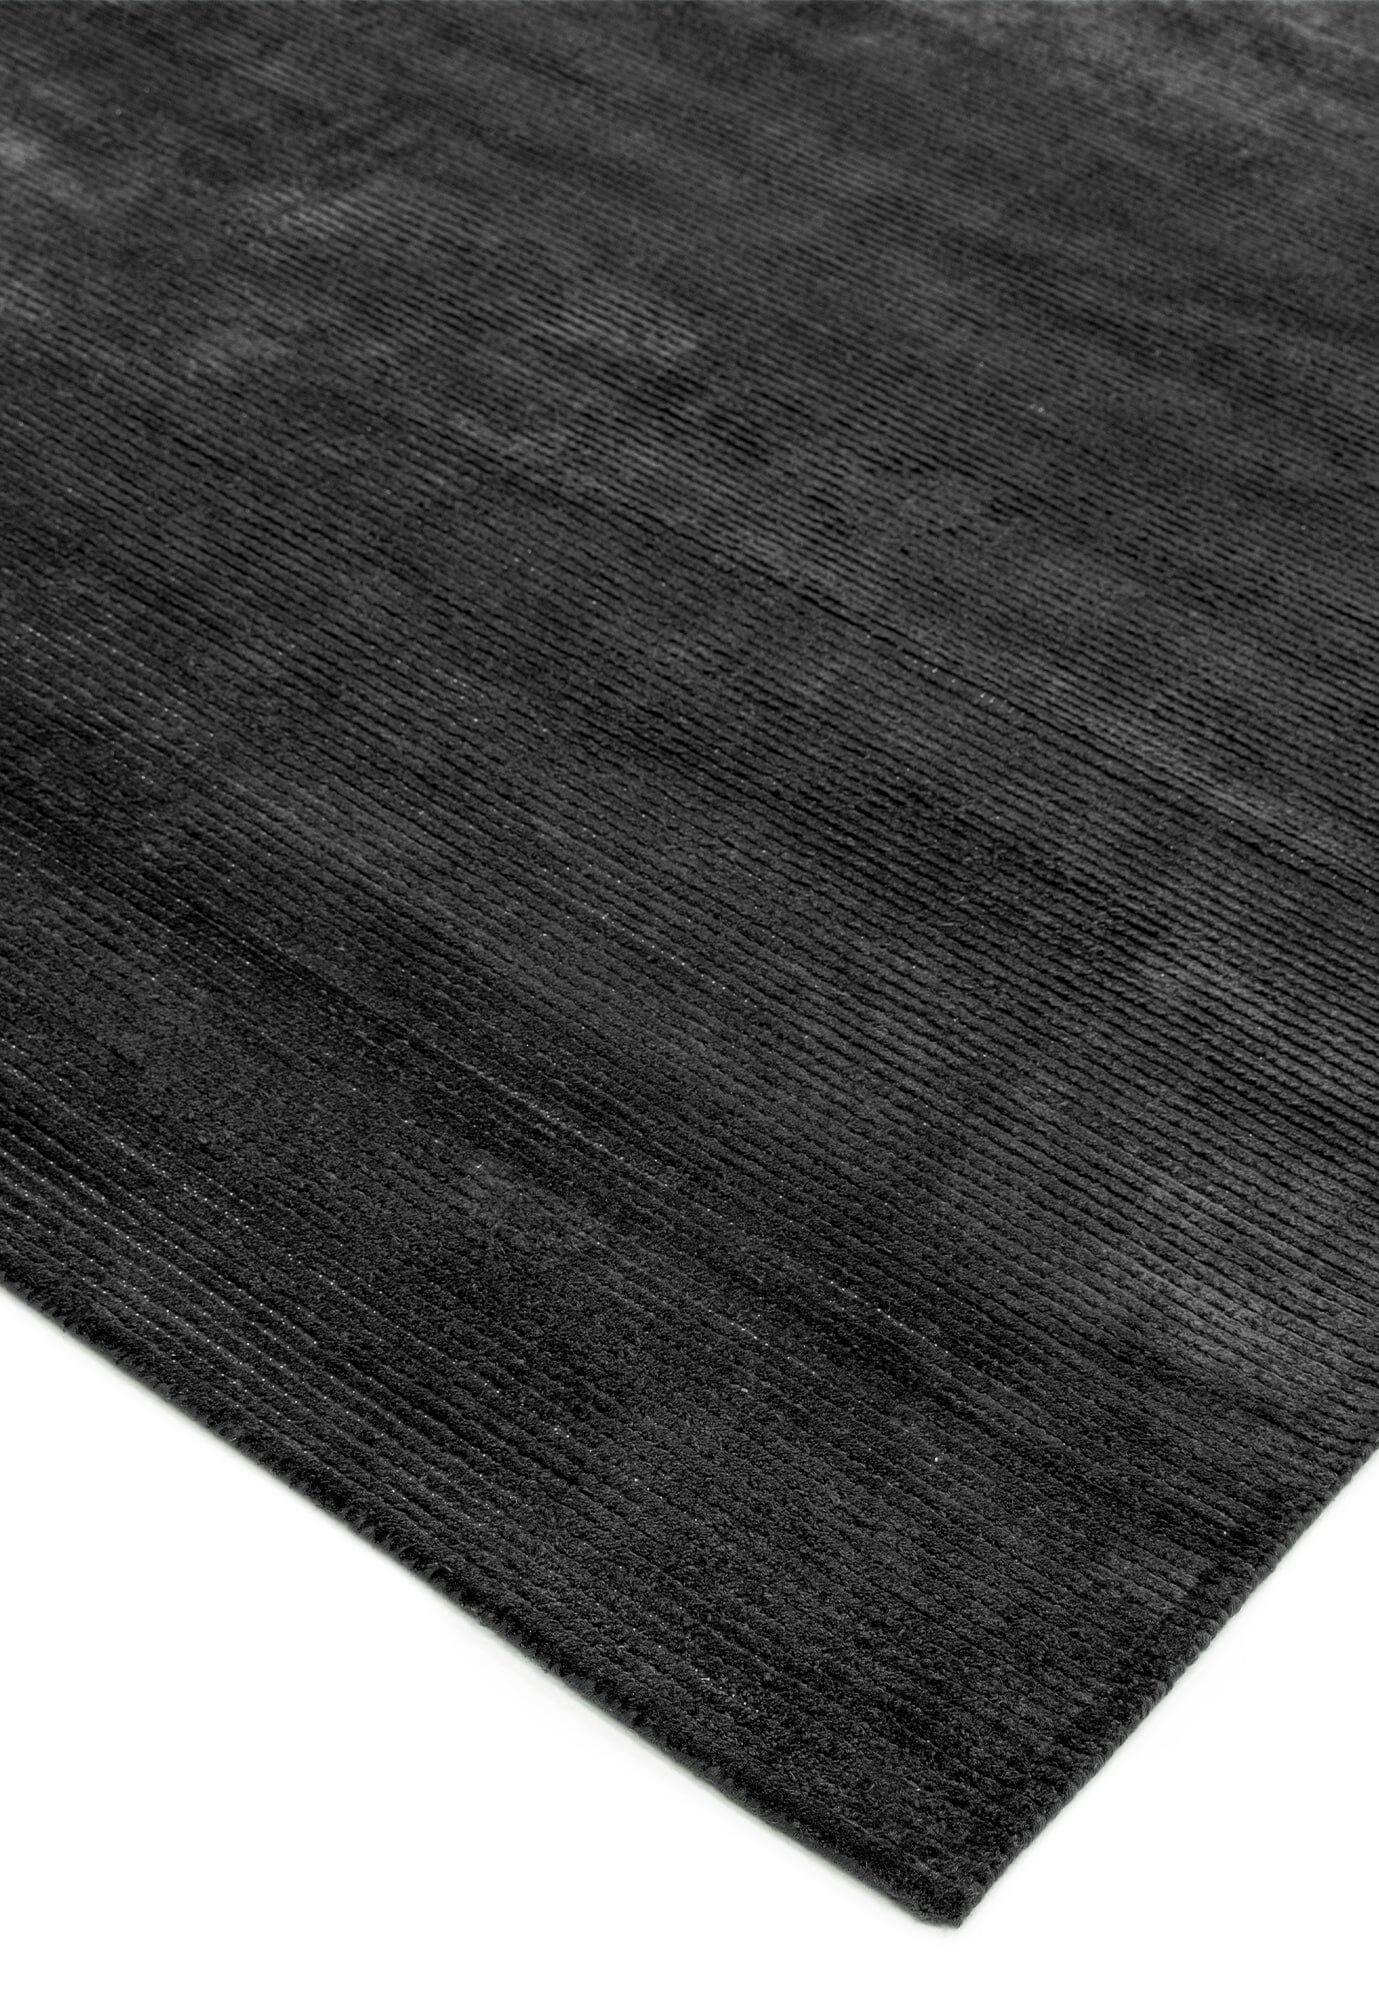 Asiatic Carpets Reko Hand Woven Rug Charcoal - 160 x 230cm